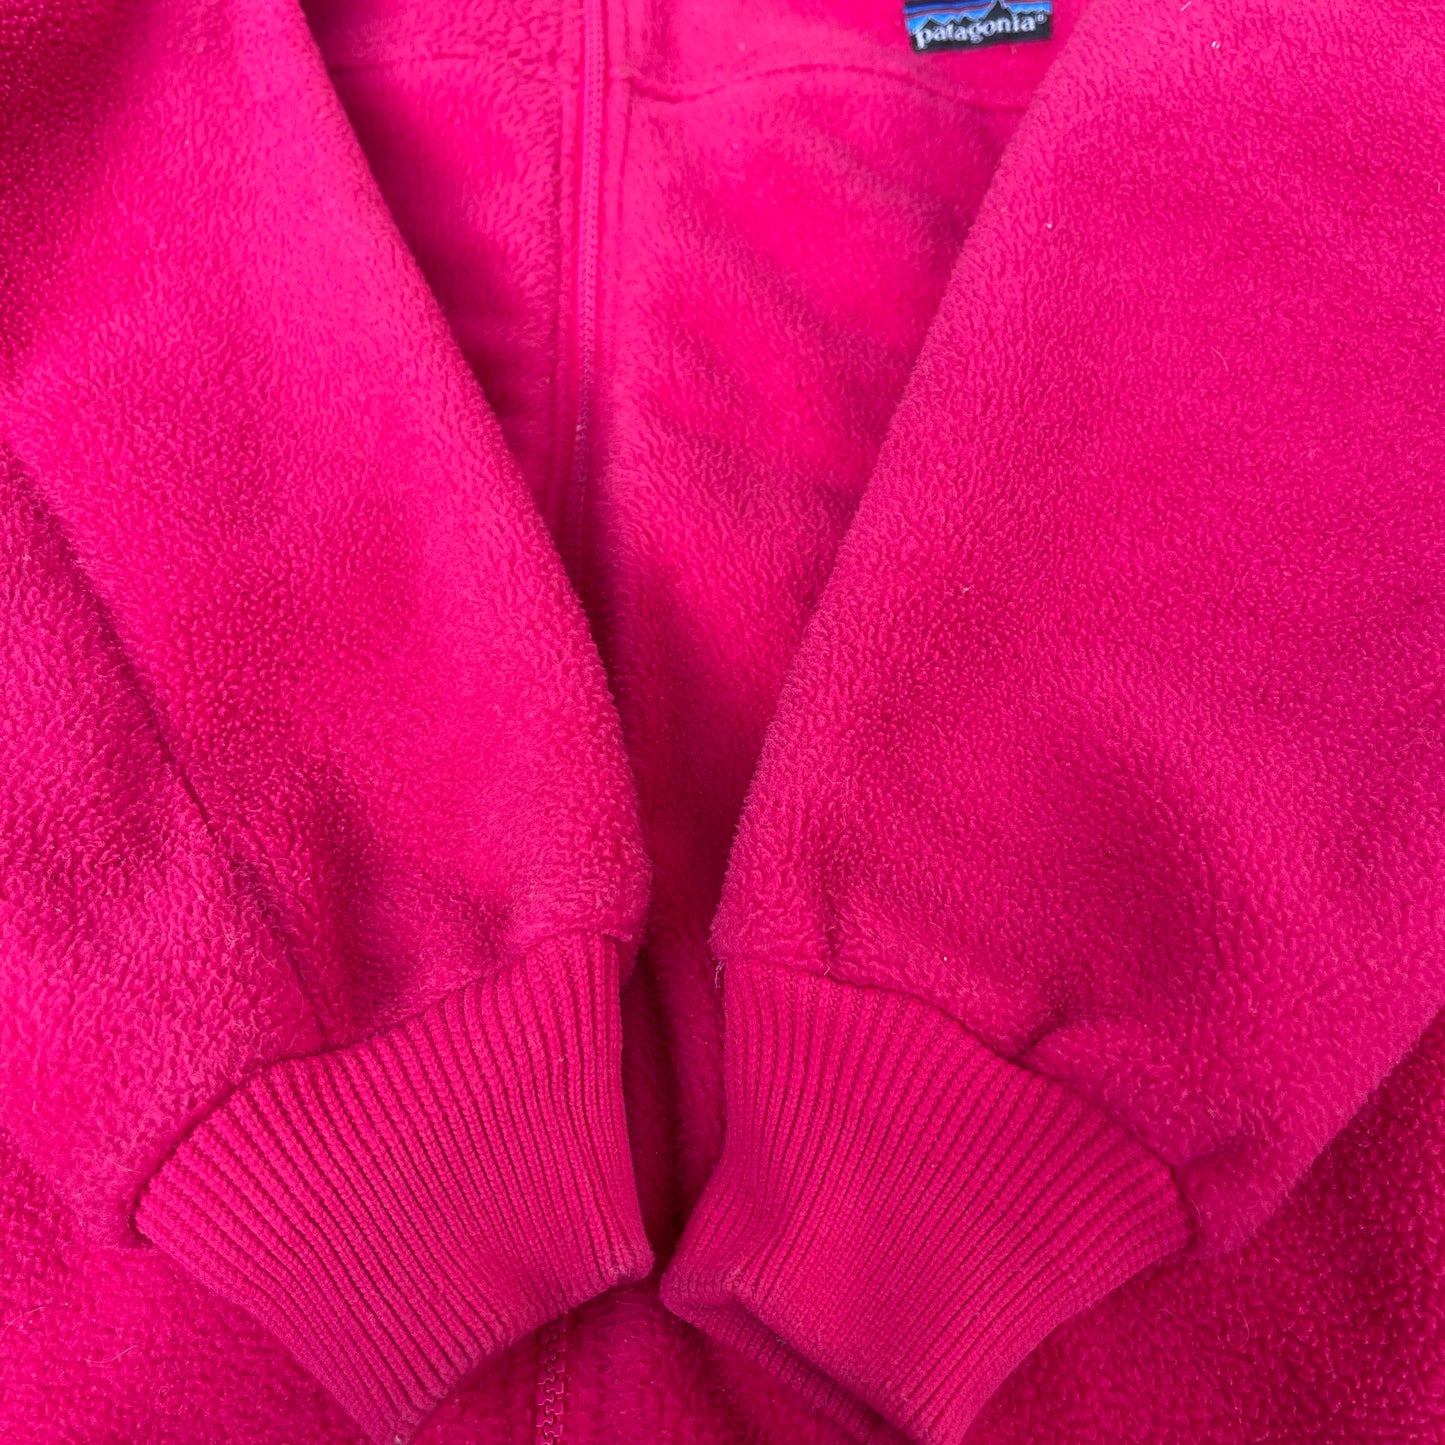 Vintage Patagonia Fleece- Jacke M Synchilla pink